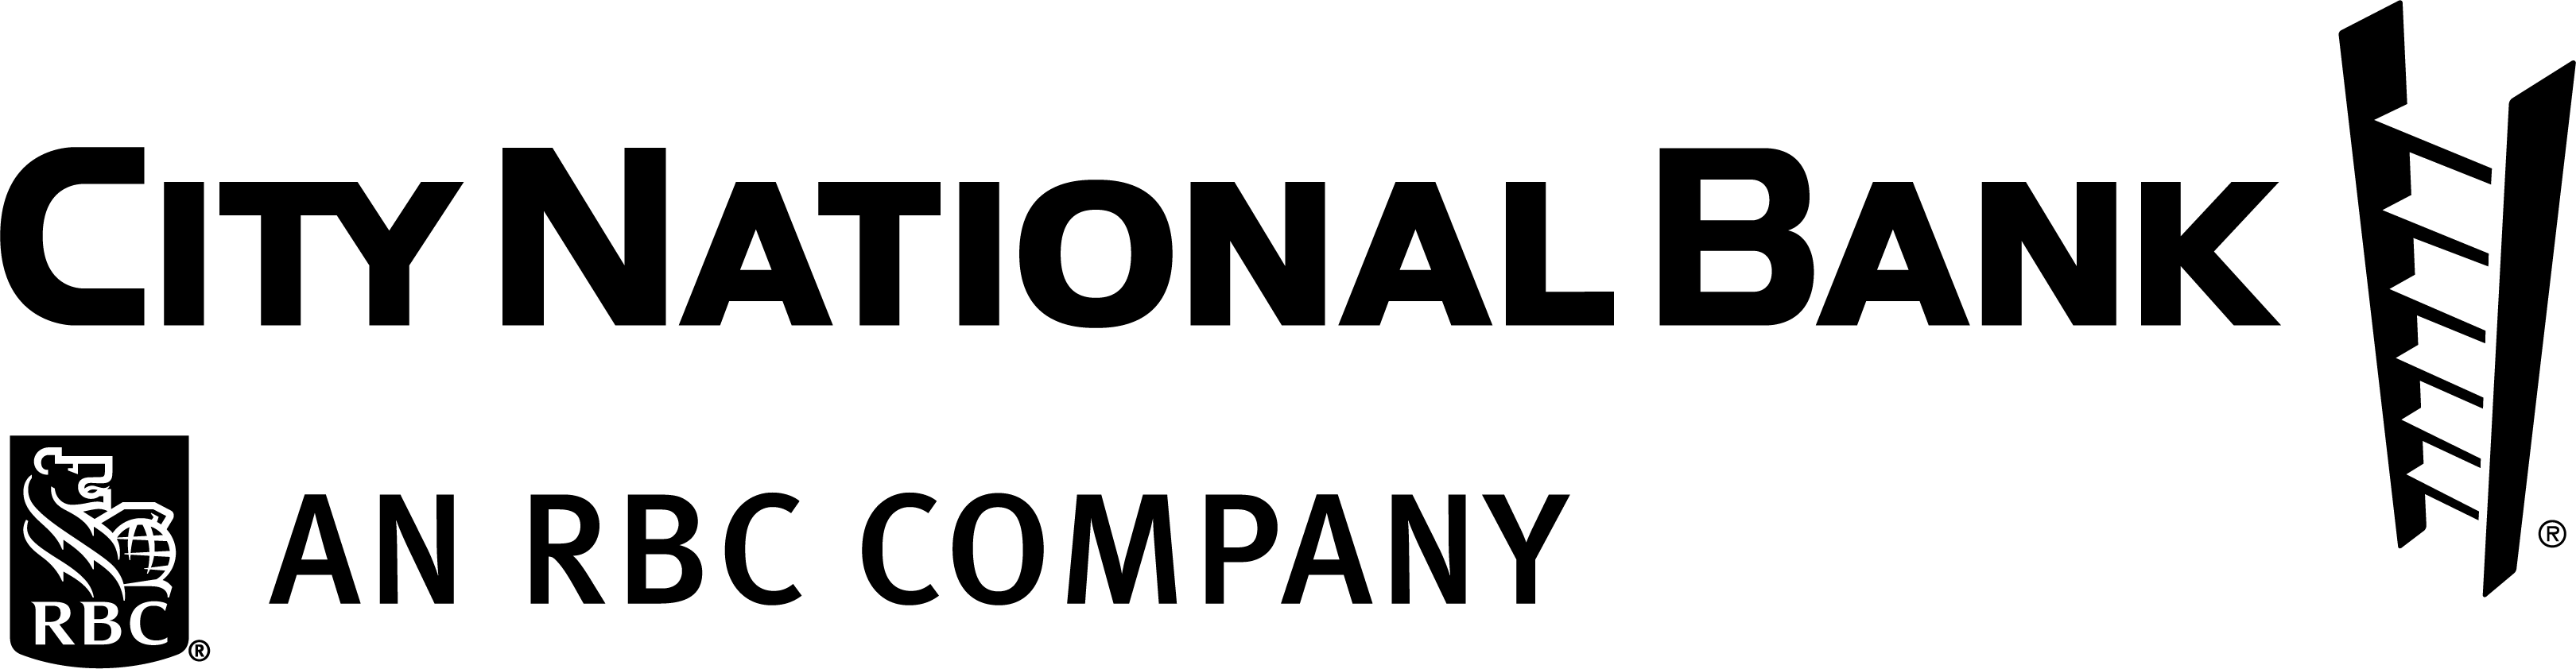 CNB-RBC Integrated Logo_K_ALT